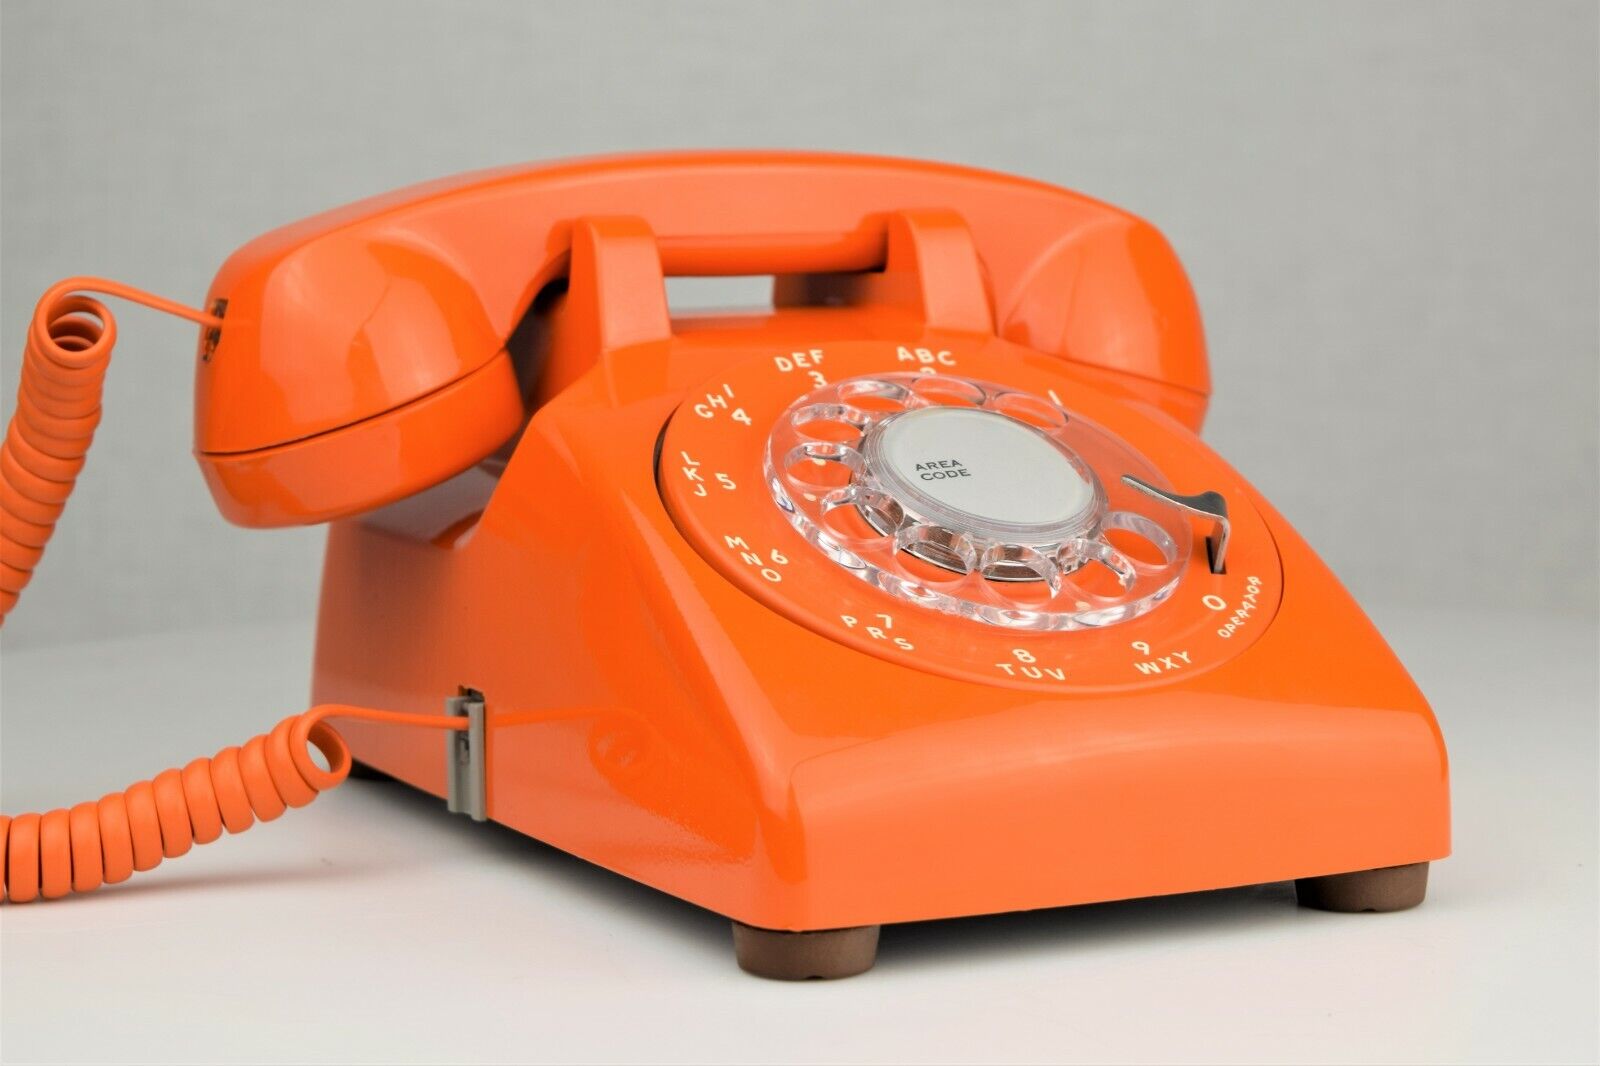 Meticulously Restored & Working - Vintage Antique Telephone - Bright Orange 500